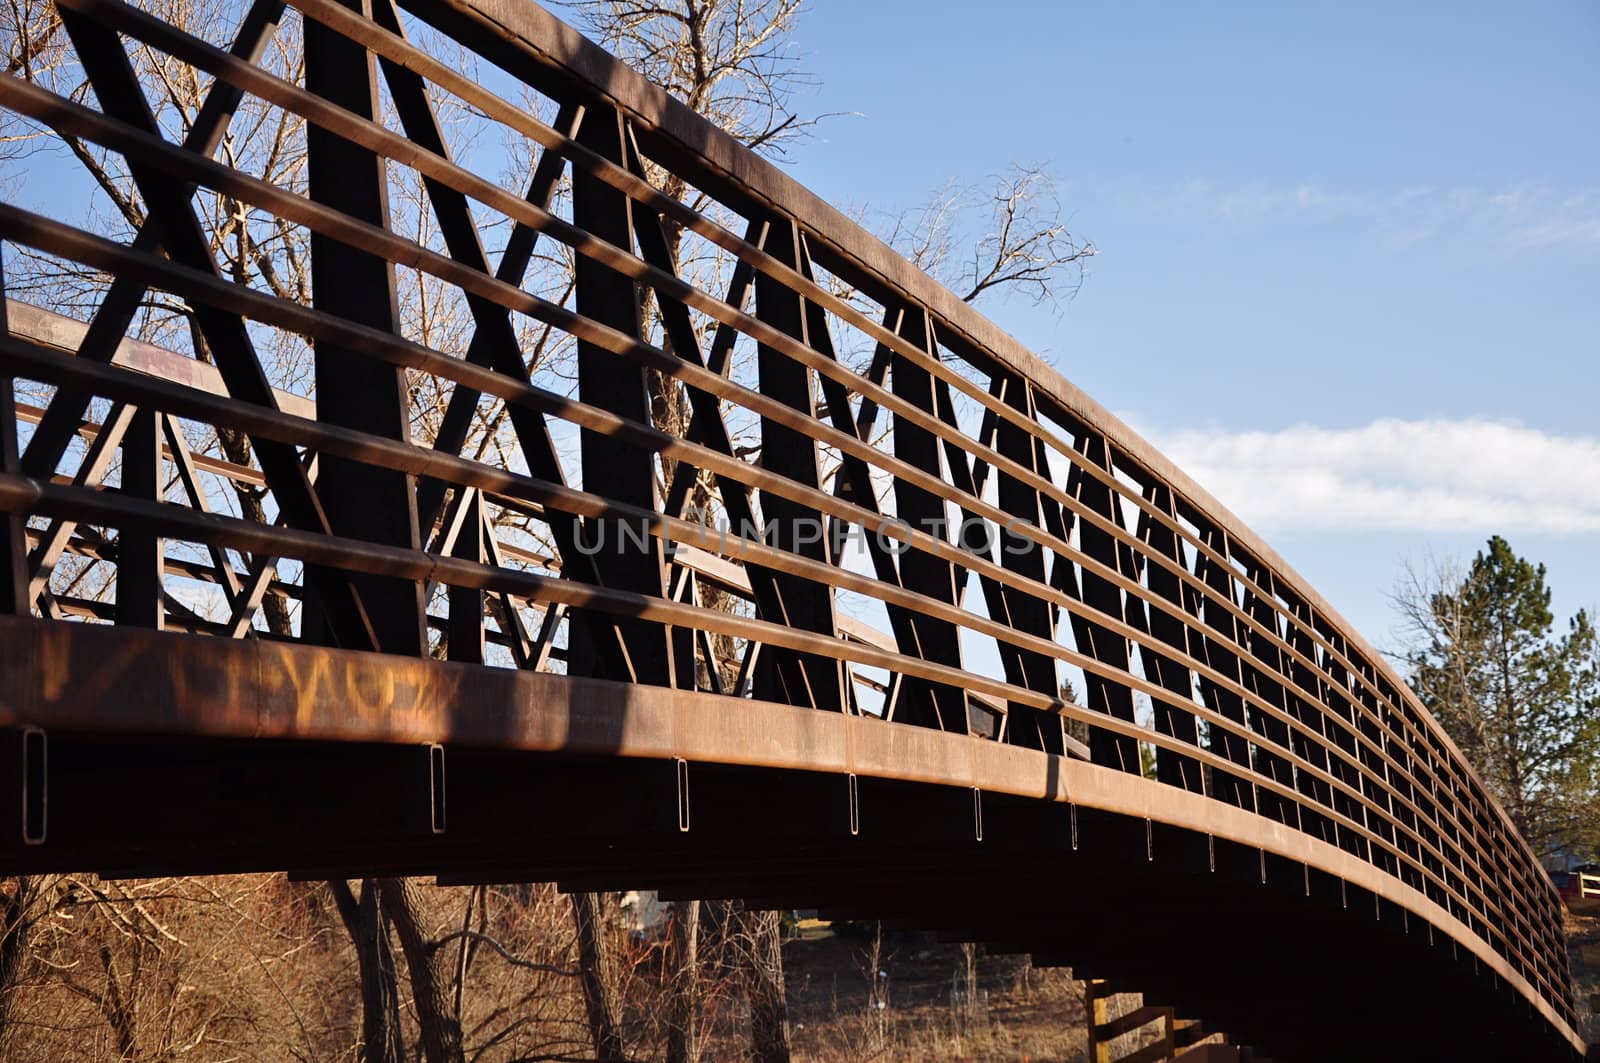 A metal bridge extends across a stream in rural Colorado.